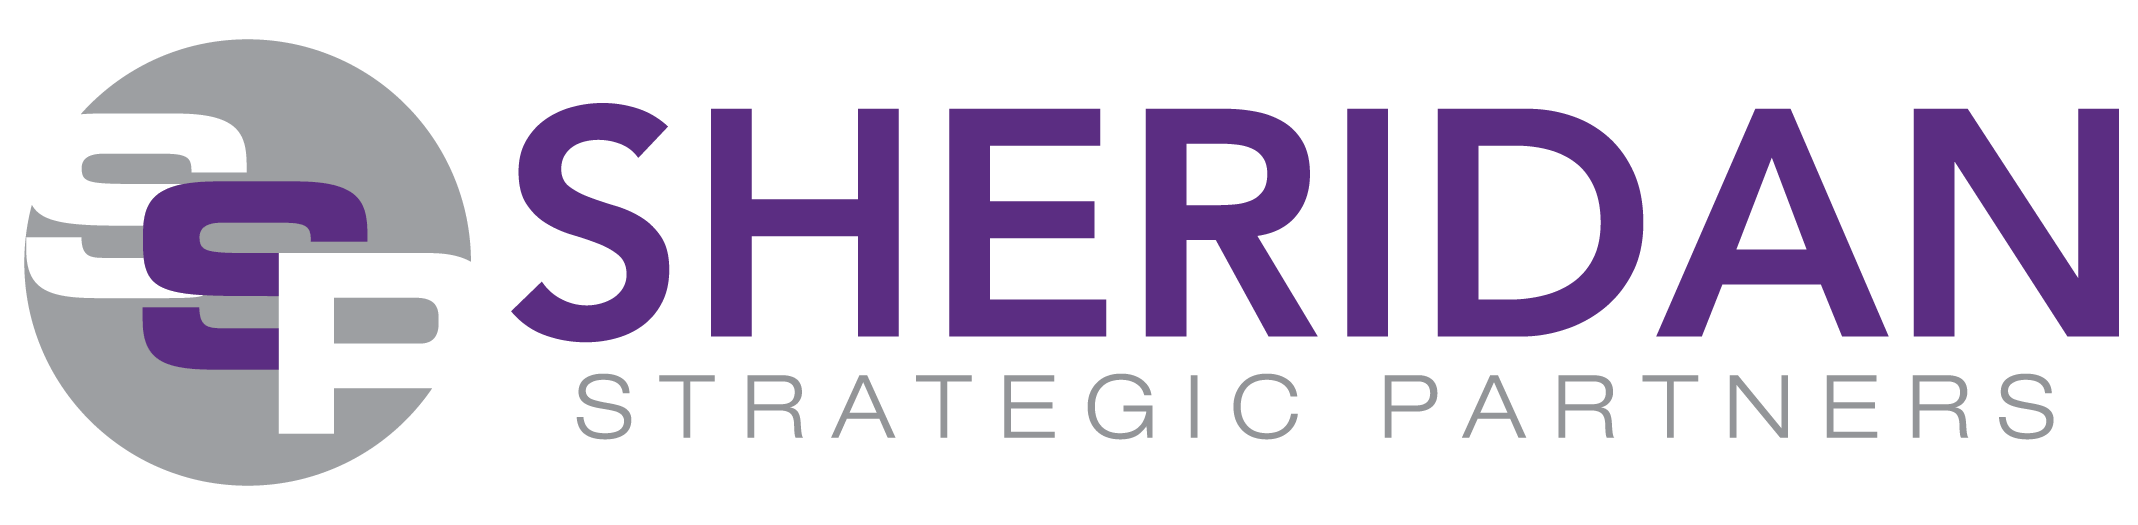 Sheridan Strategic Partners